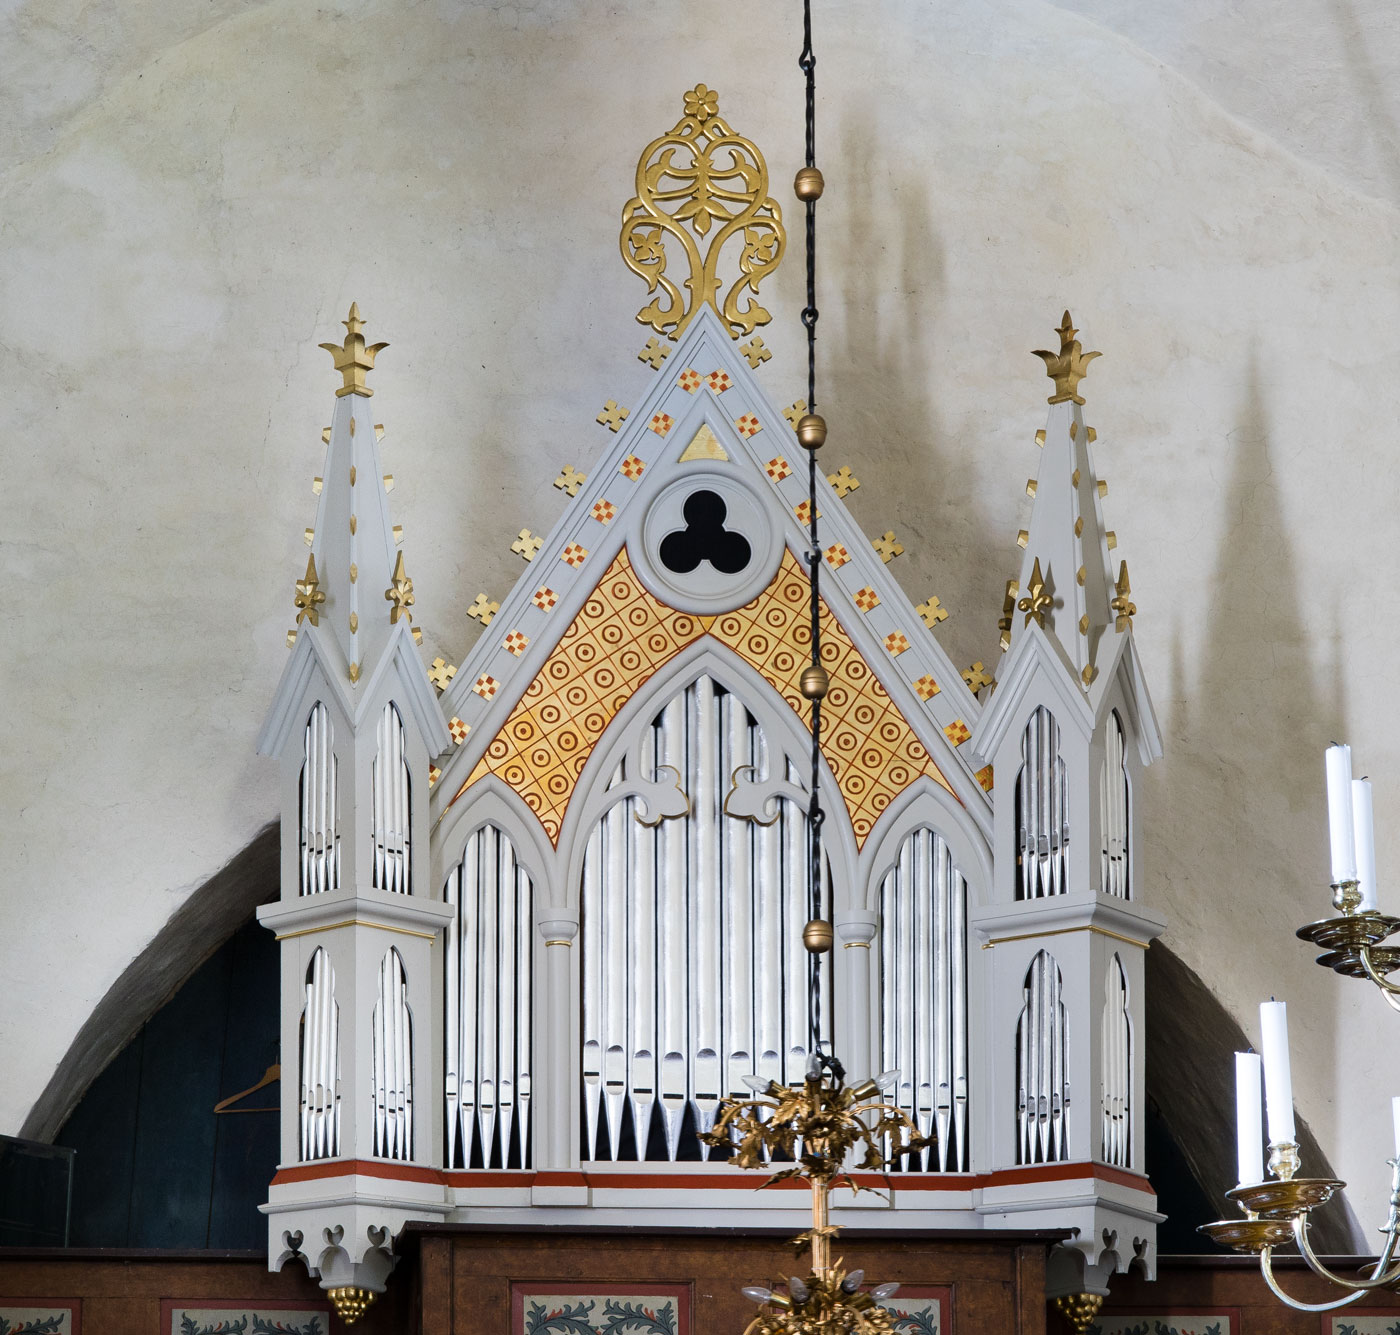 Orgel - Sundre kyrka